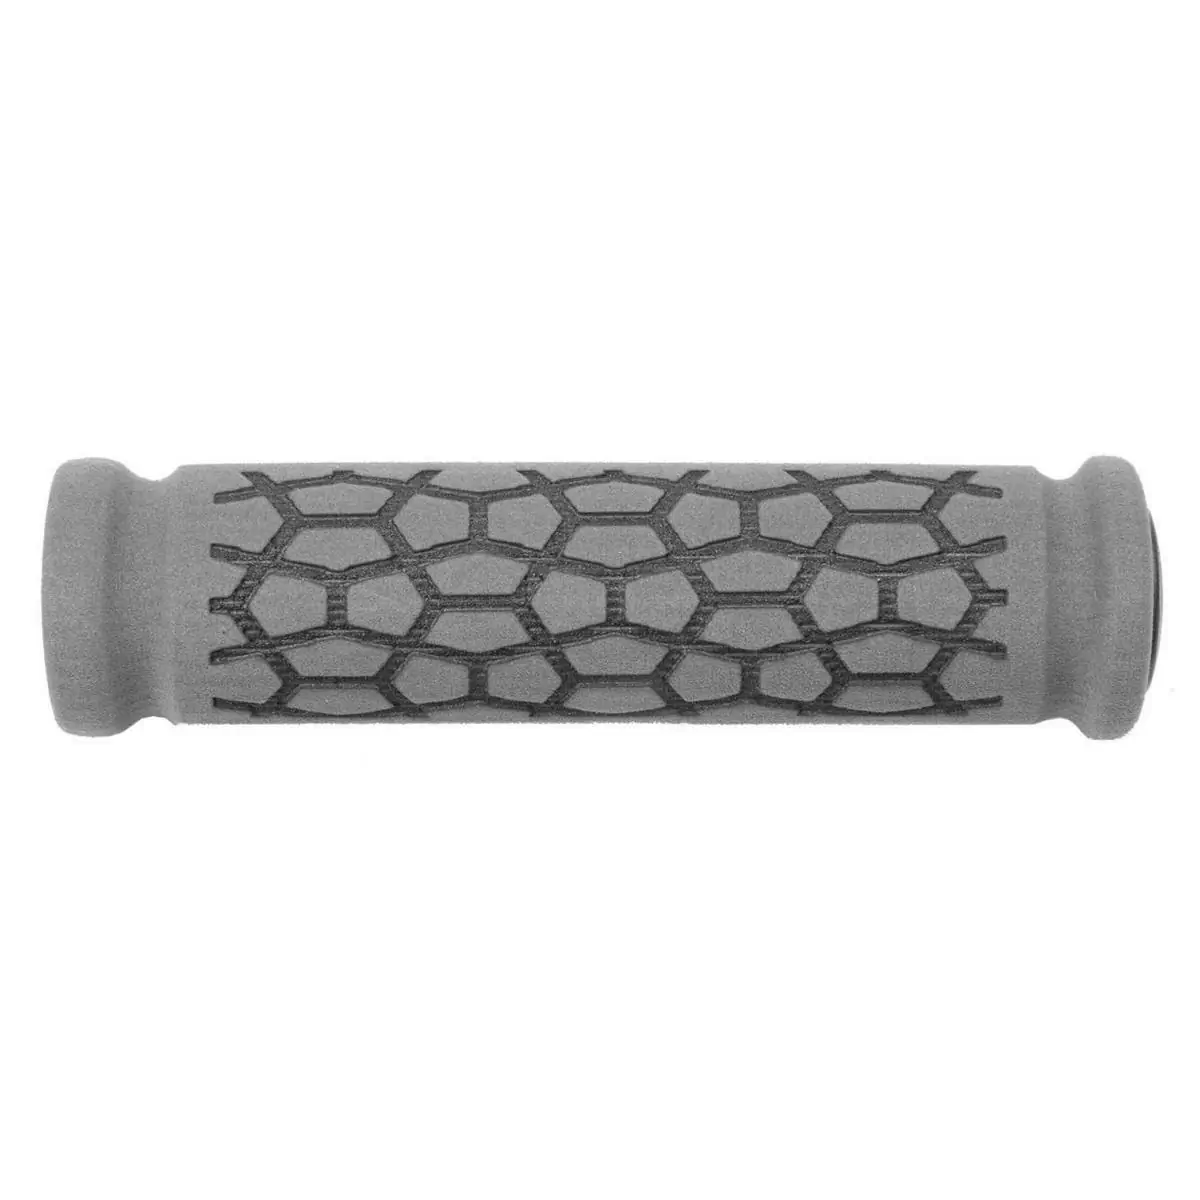 pair grips high quality nano foam grey 130mm #2